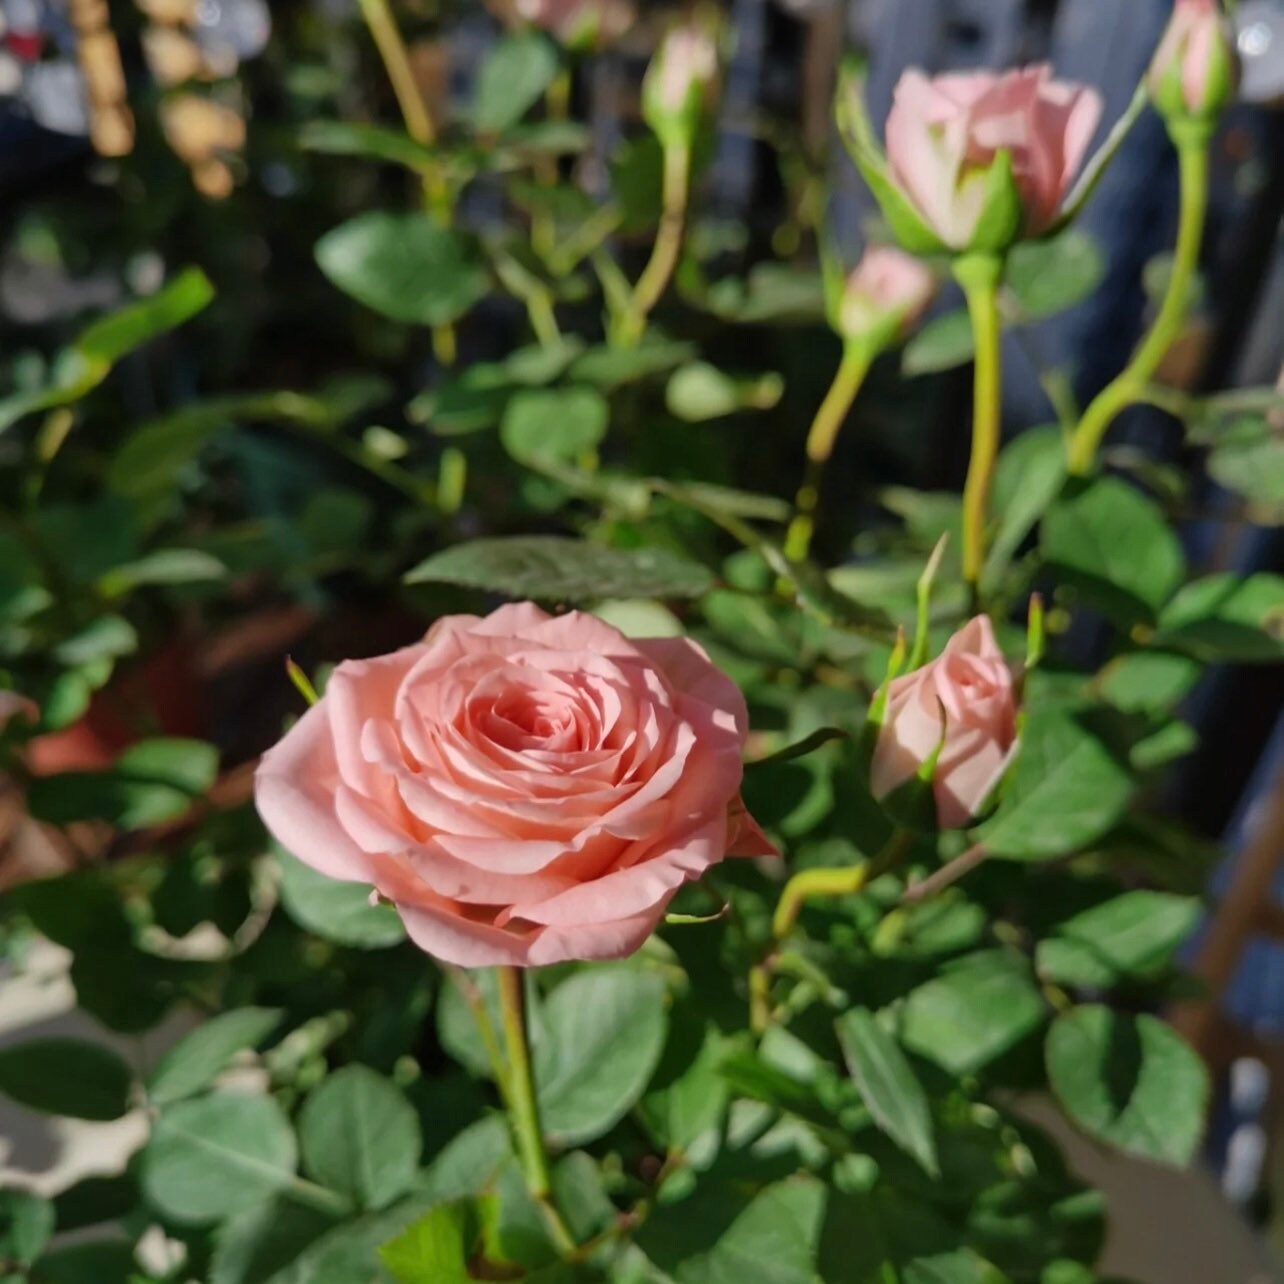 Rose “Cinderella” Bush Light Pink Floribundas Rose Live Plant 4” Pot ...